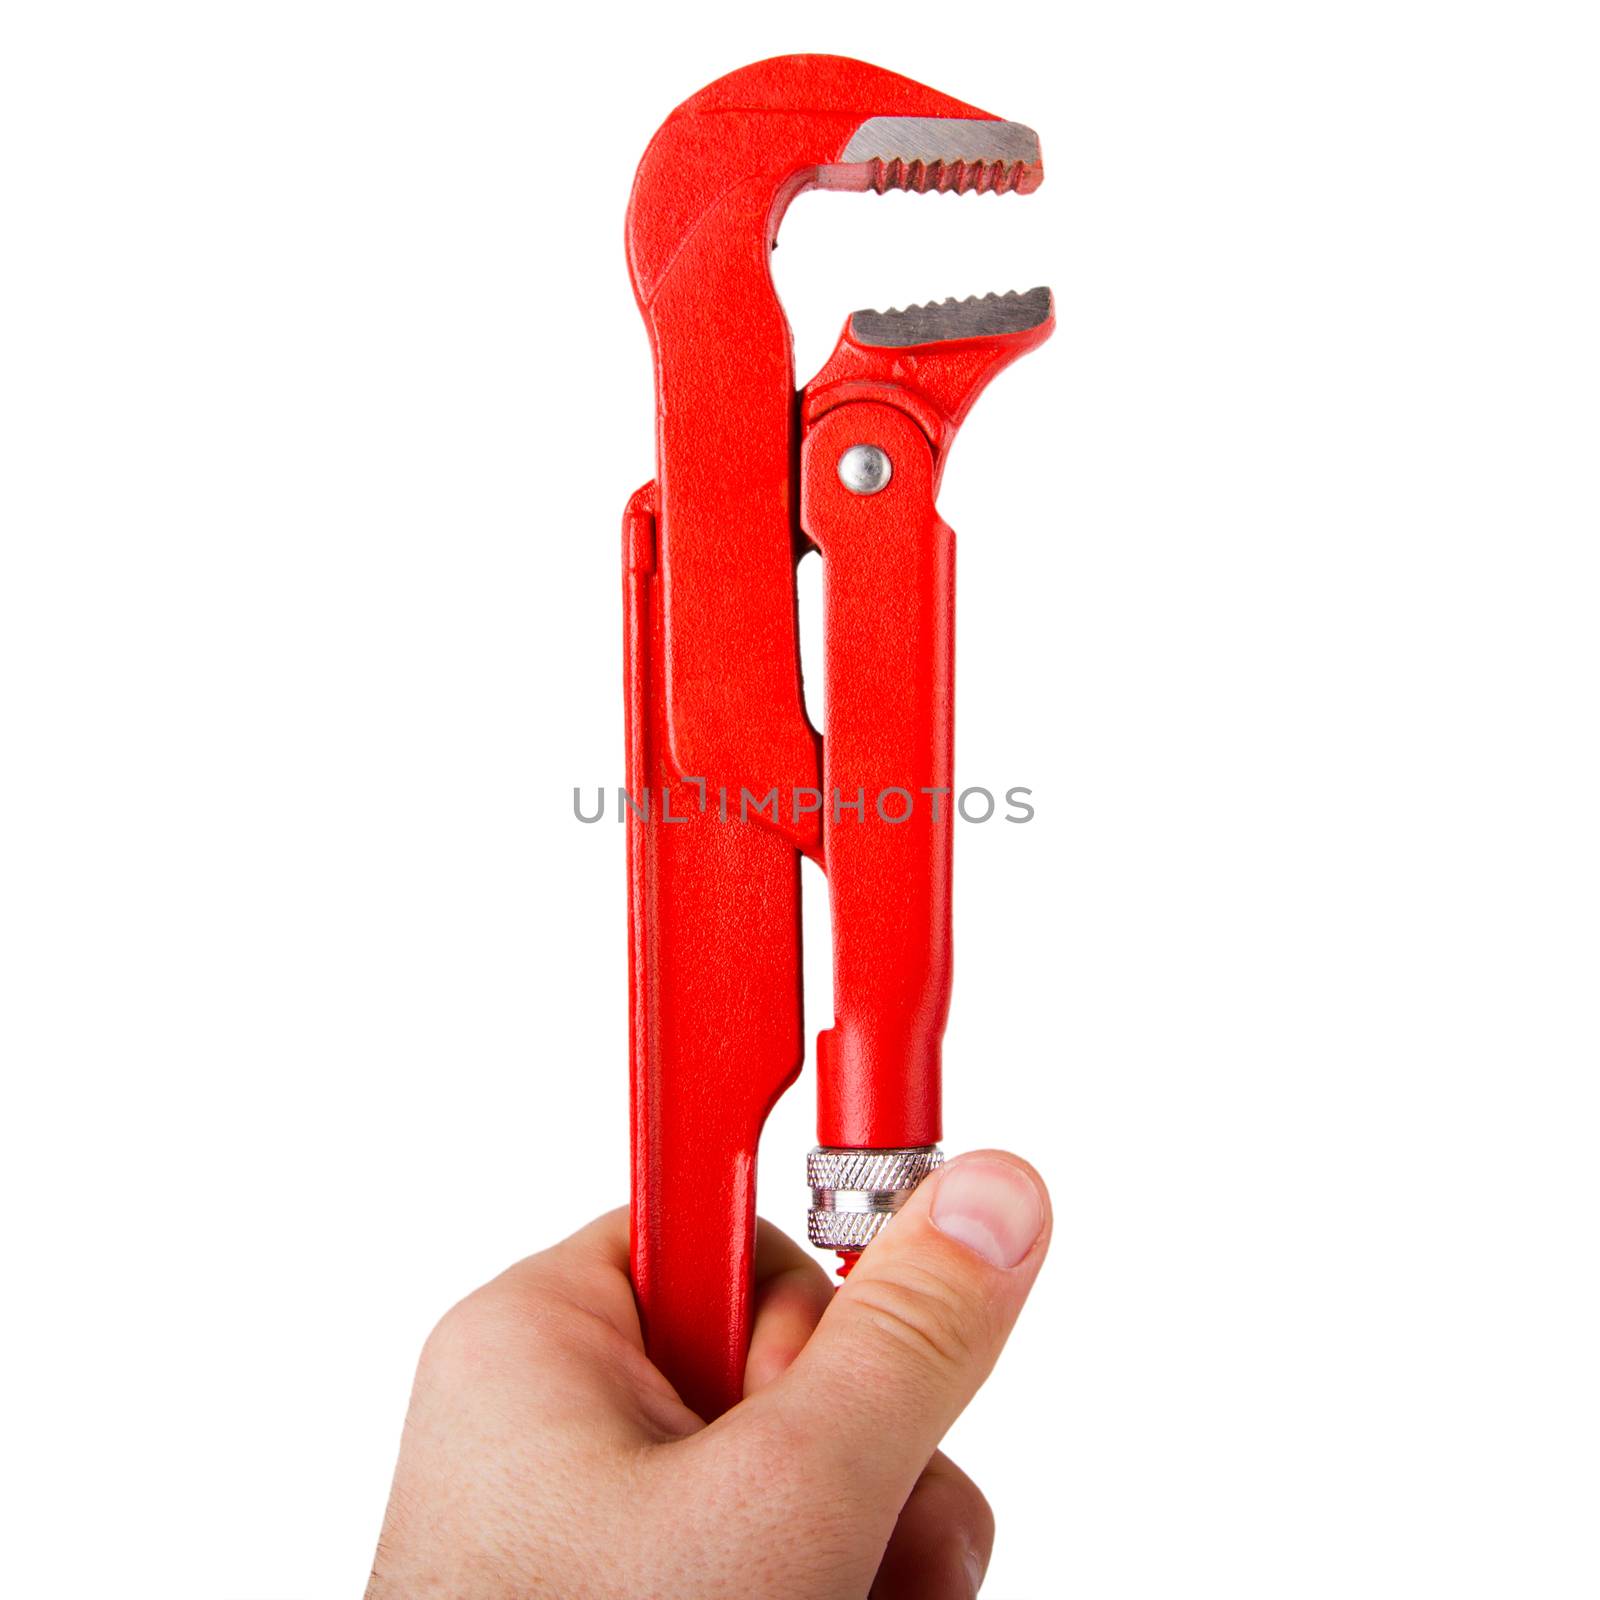 Adjustable wrench by grigorenko